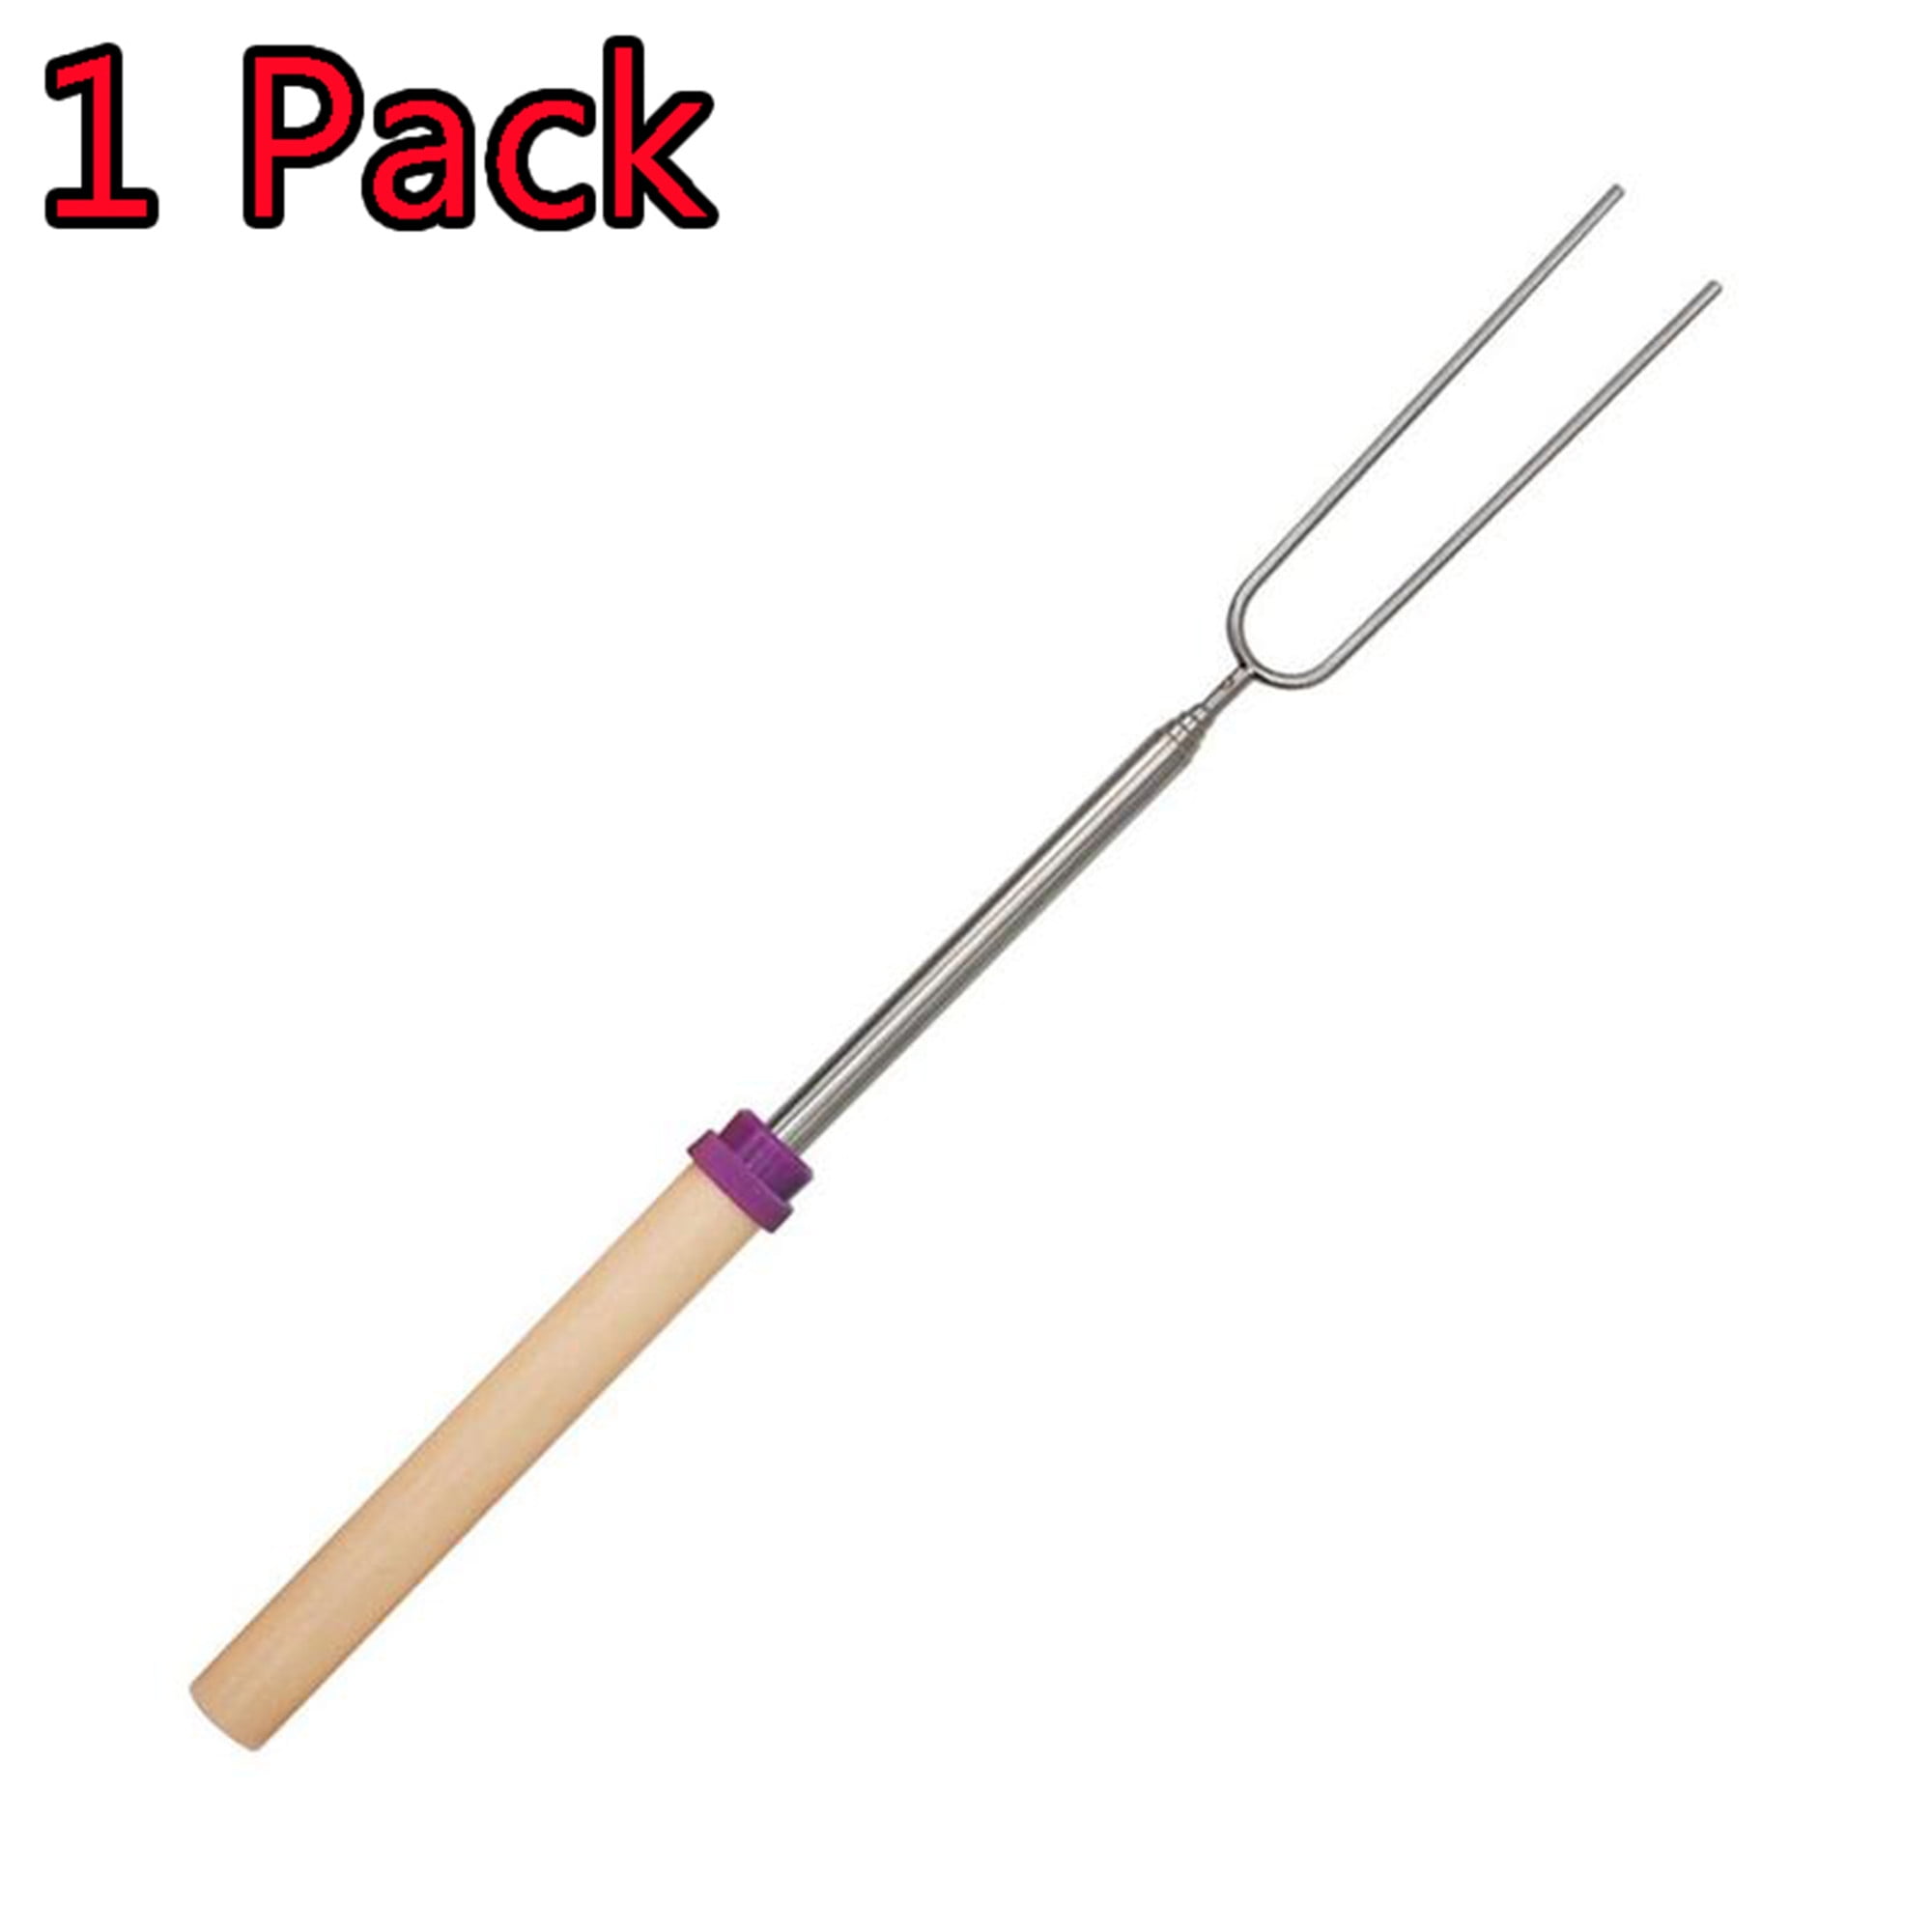 Bamboo Marshmallow Roasting Sticks 6-30 Inch 4-6mm Thick Extra Long Heavy Duty 